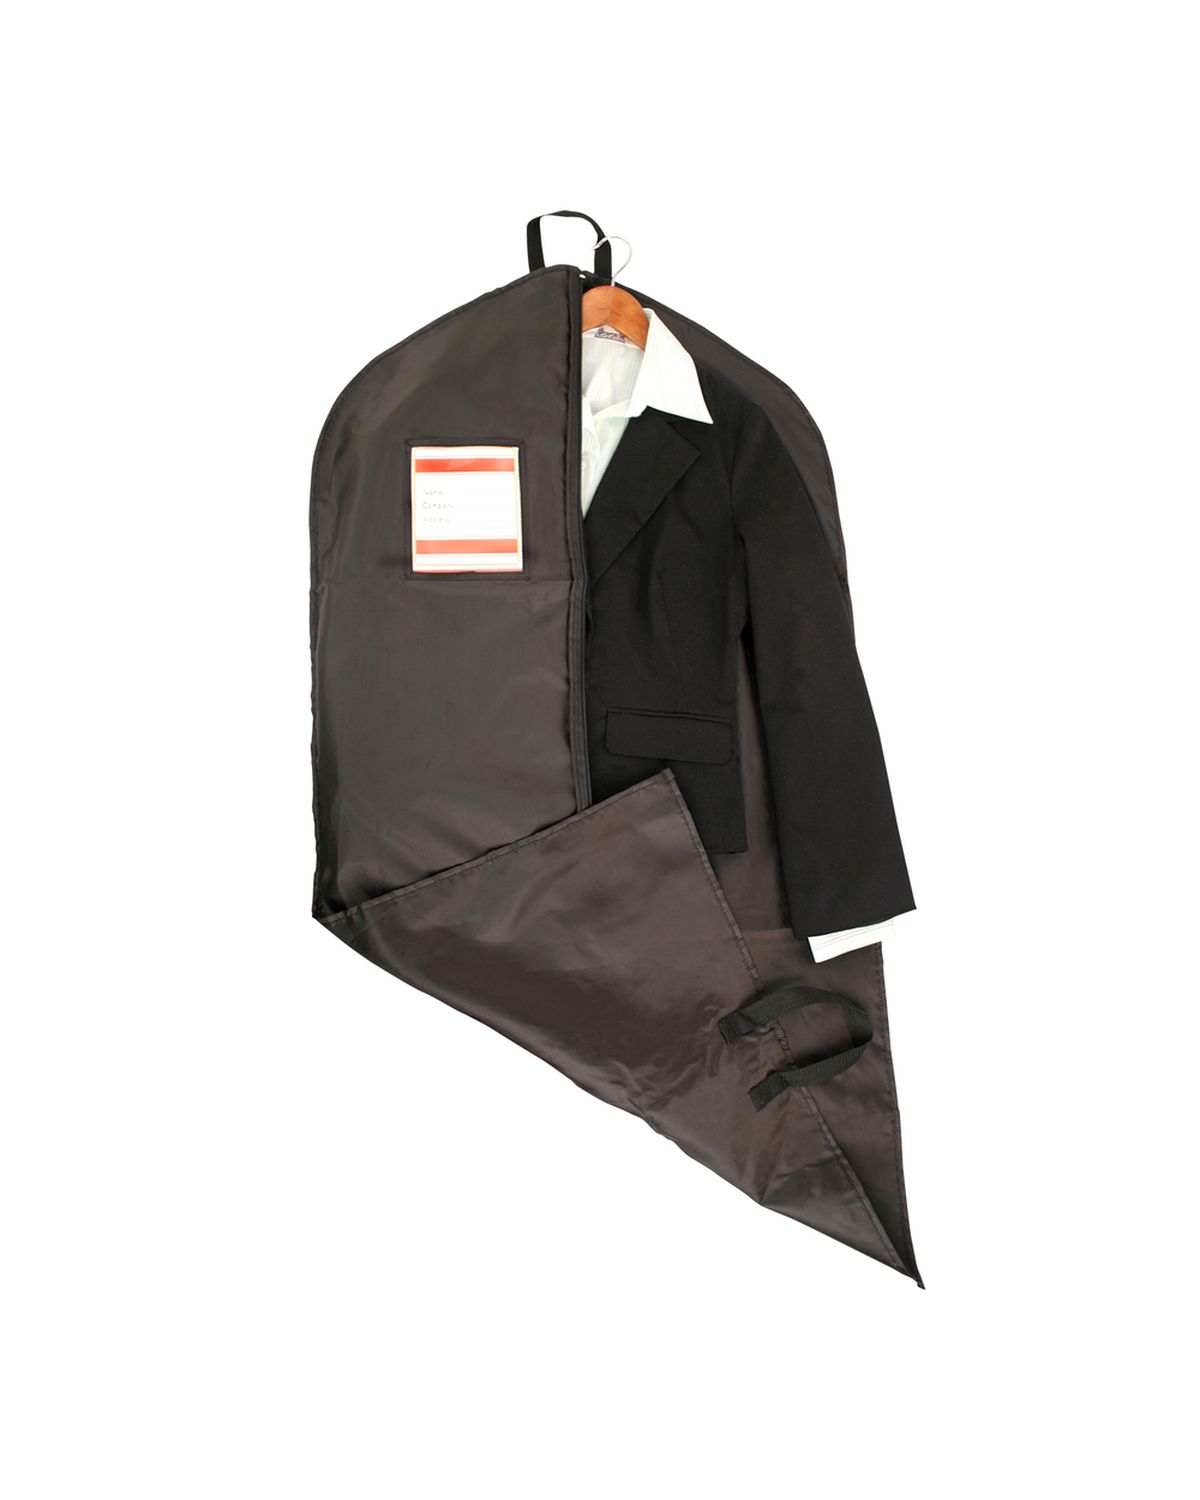 'Liberty Bags 9009 Garment Bag'